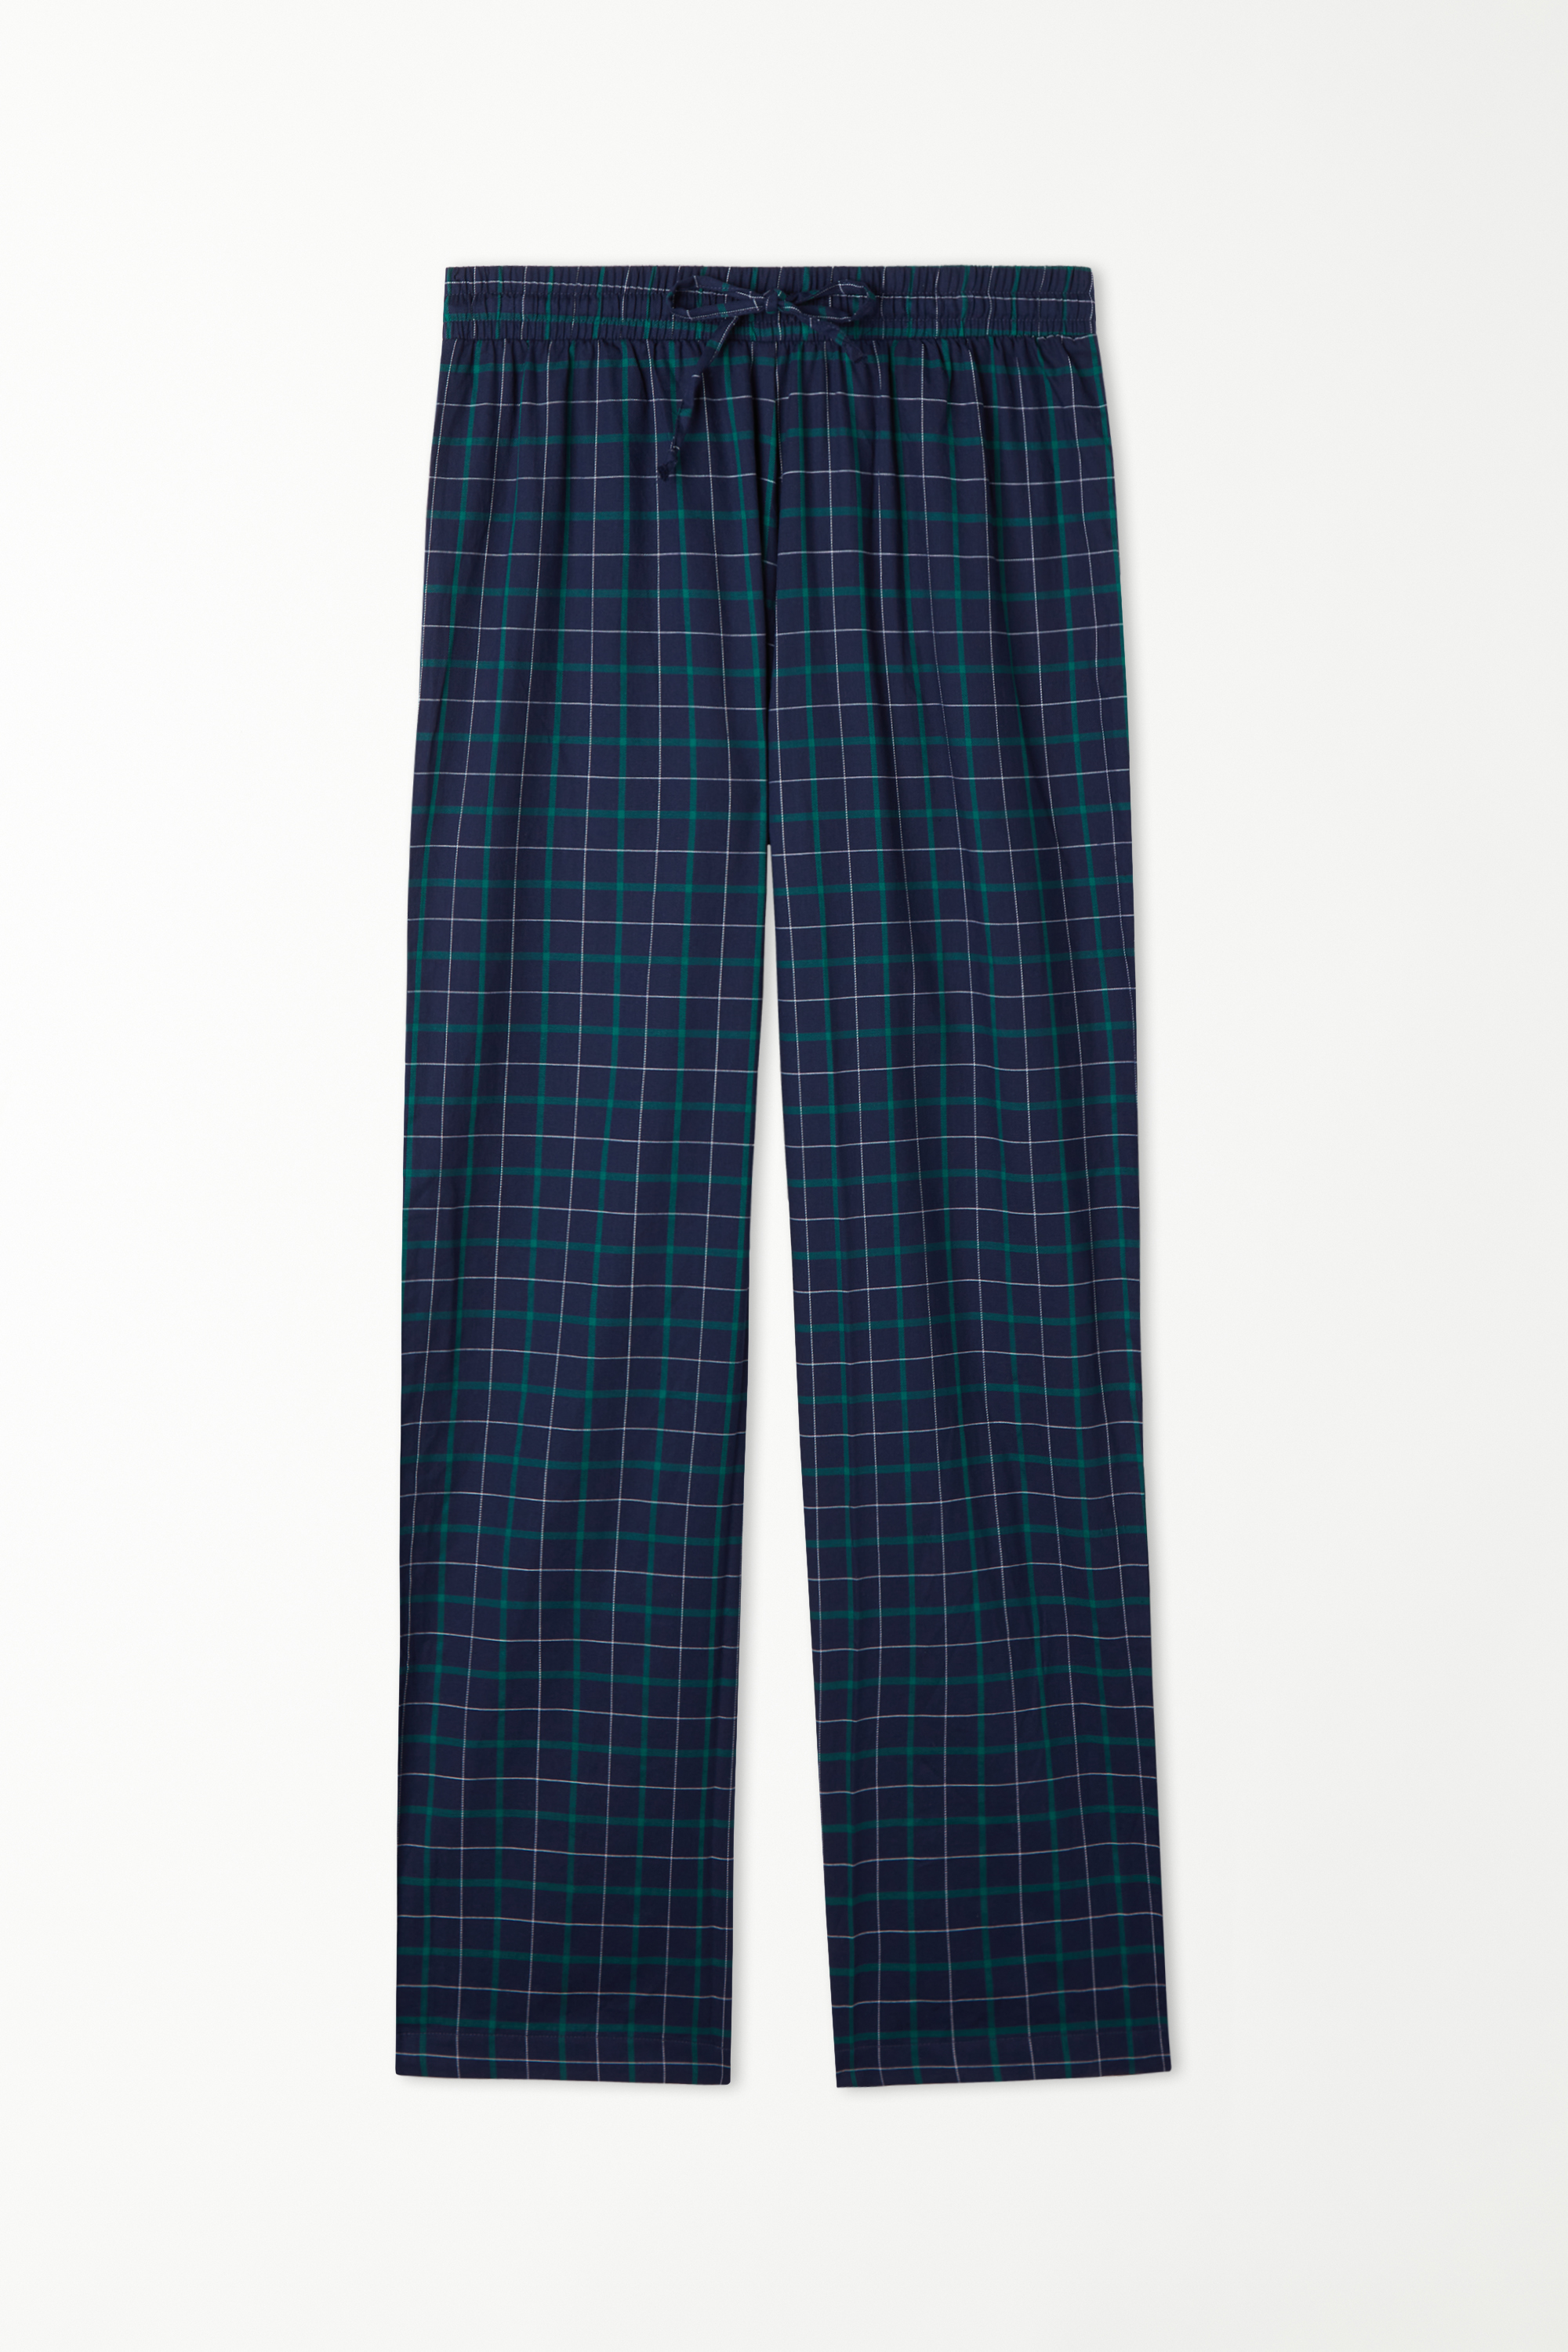 Full Length Straight Cut Cotton Cloth Pants